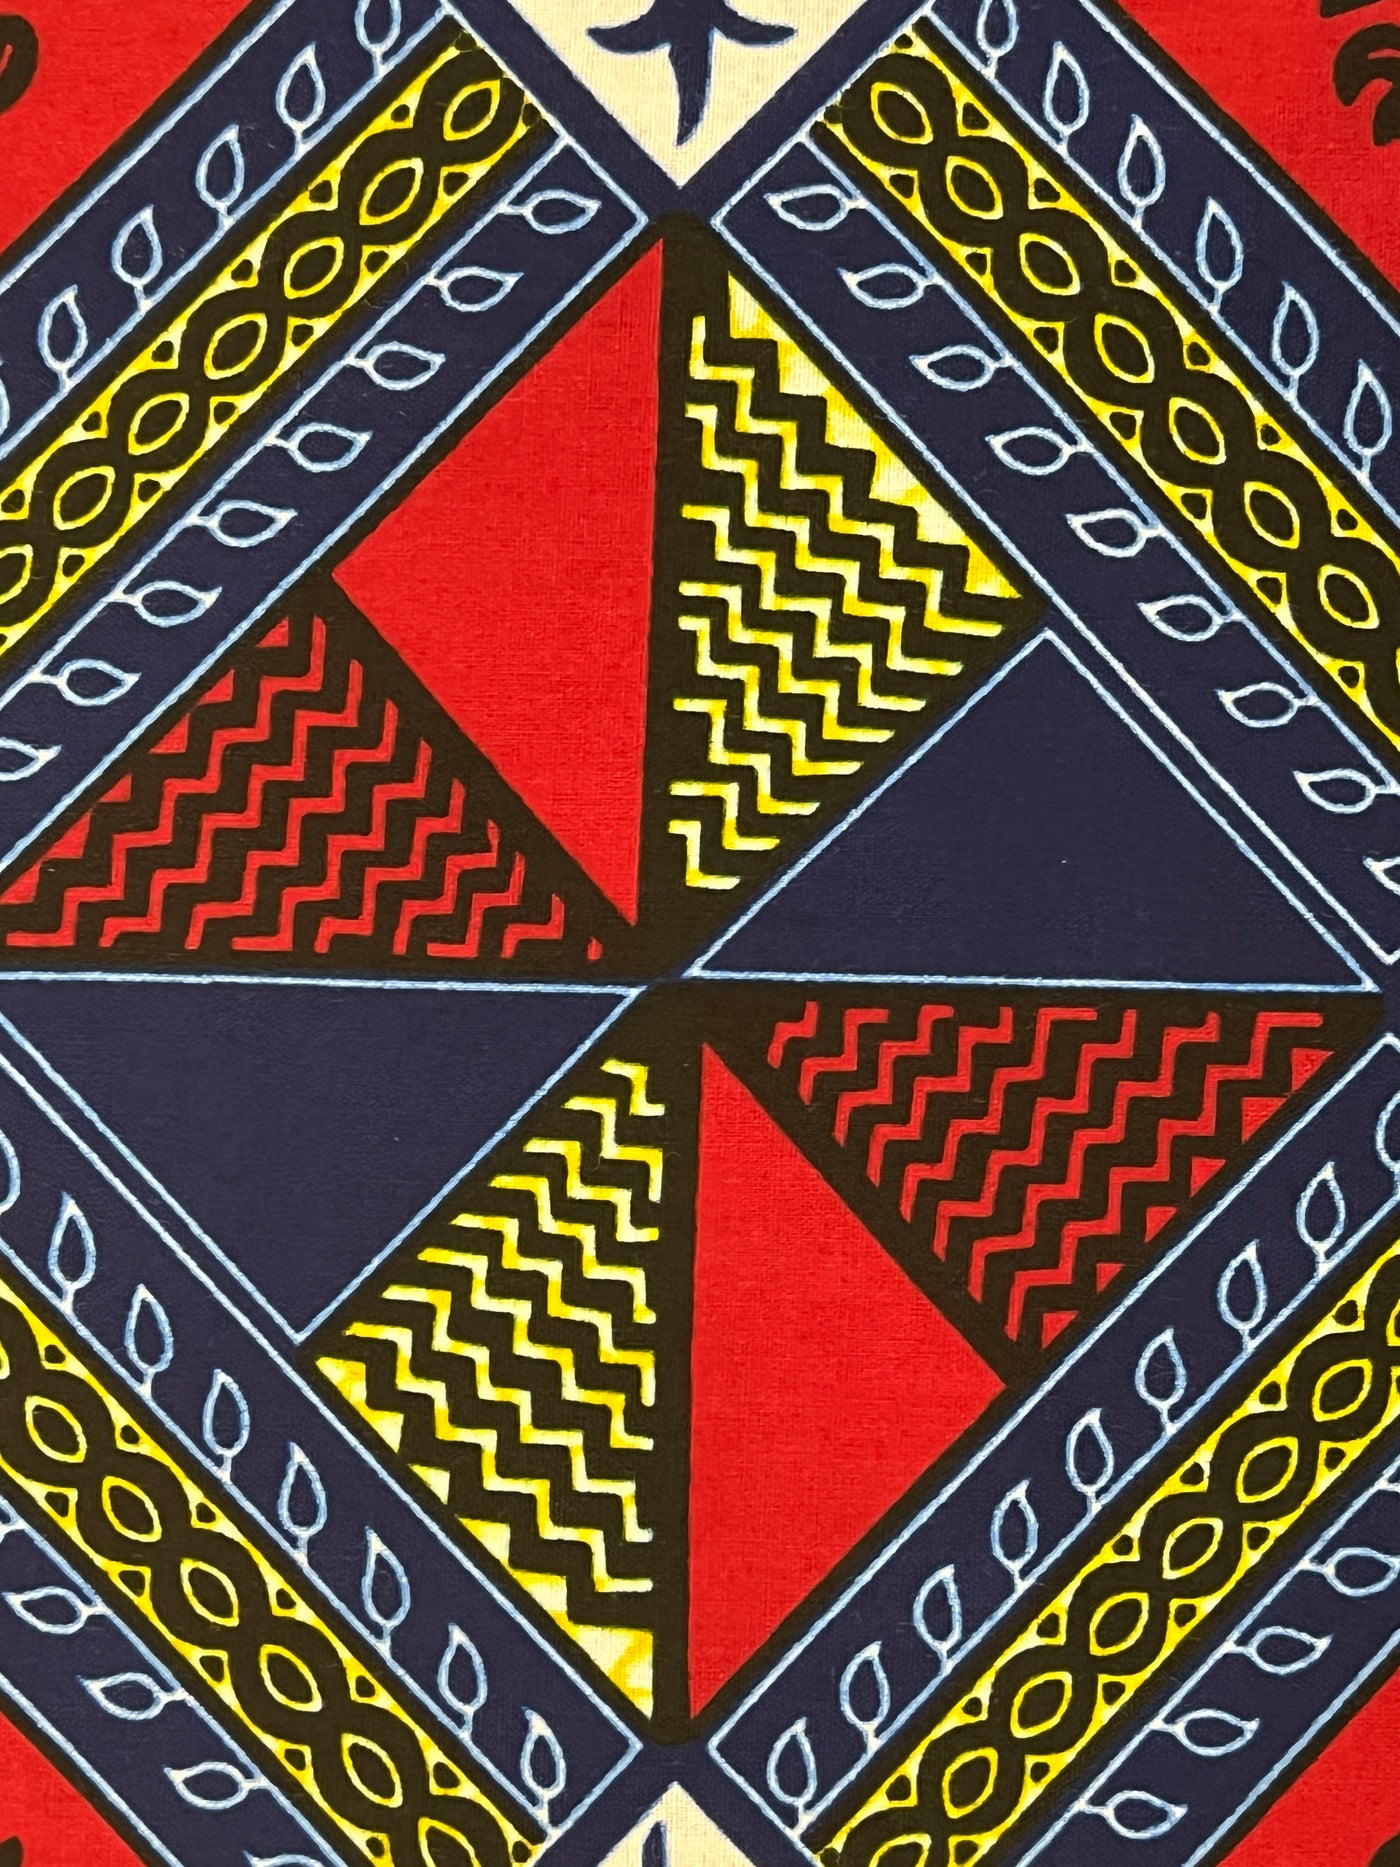 Ankara Fabric - 78529RB